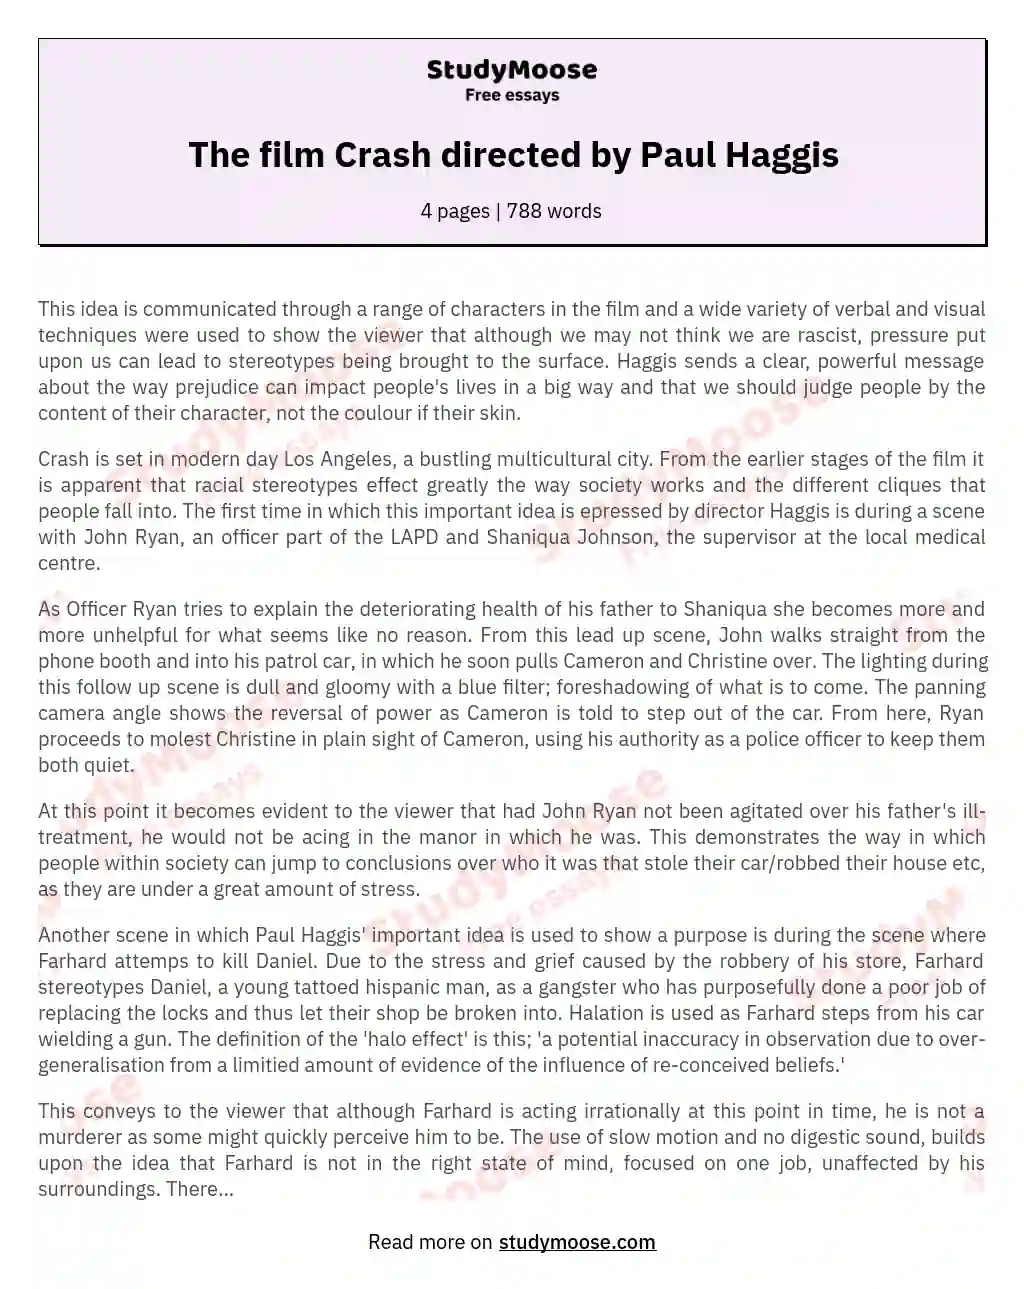 The film Crash directed by Paul Haggis